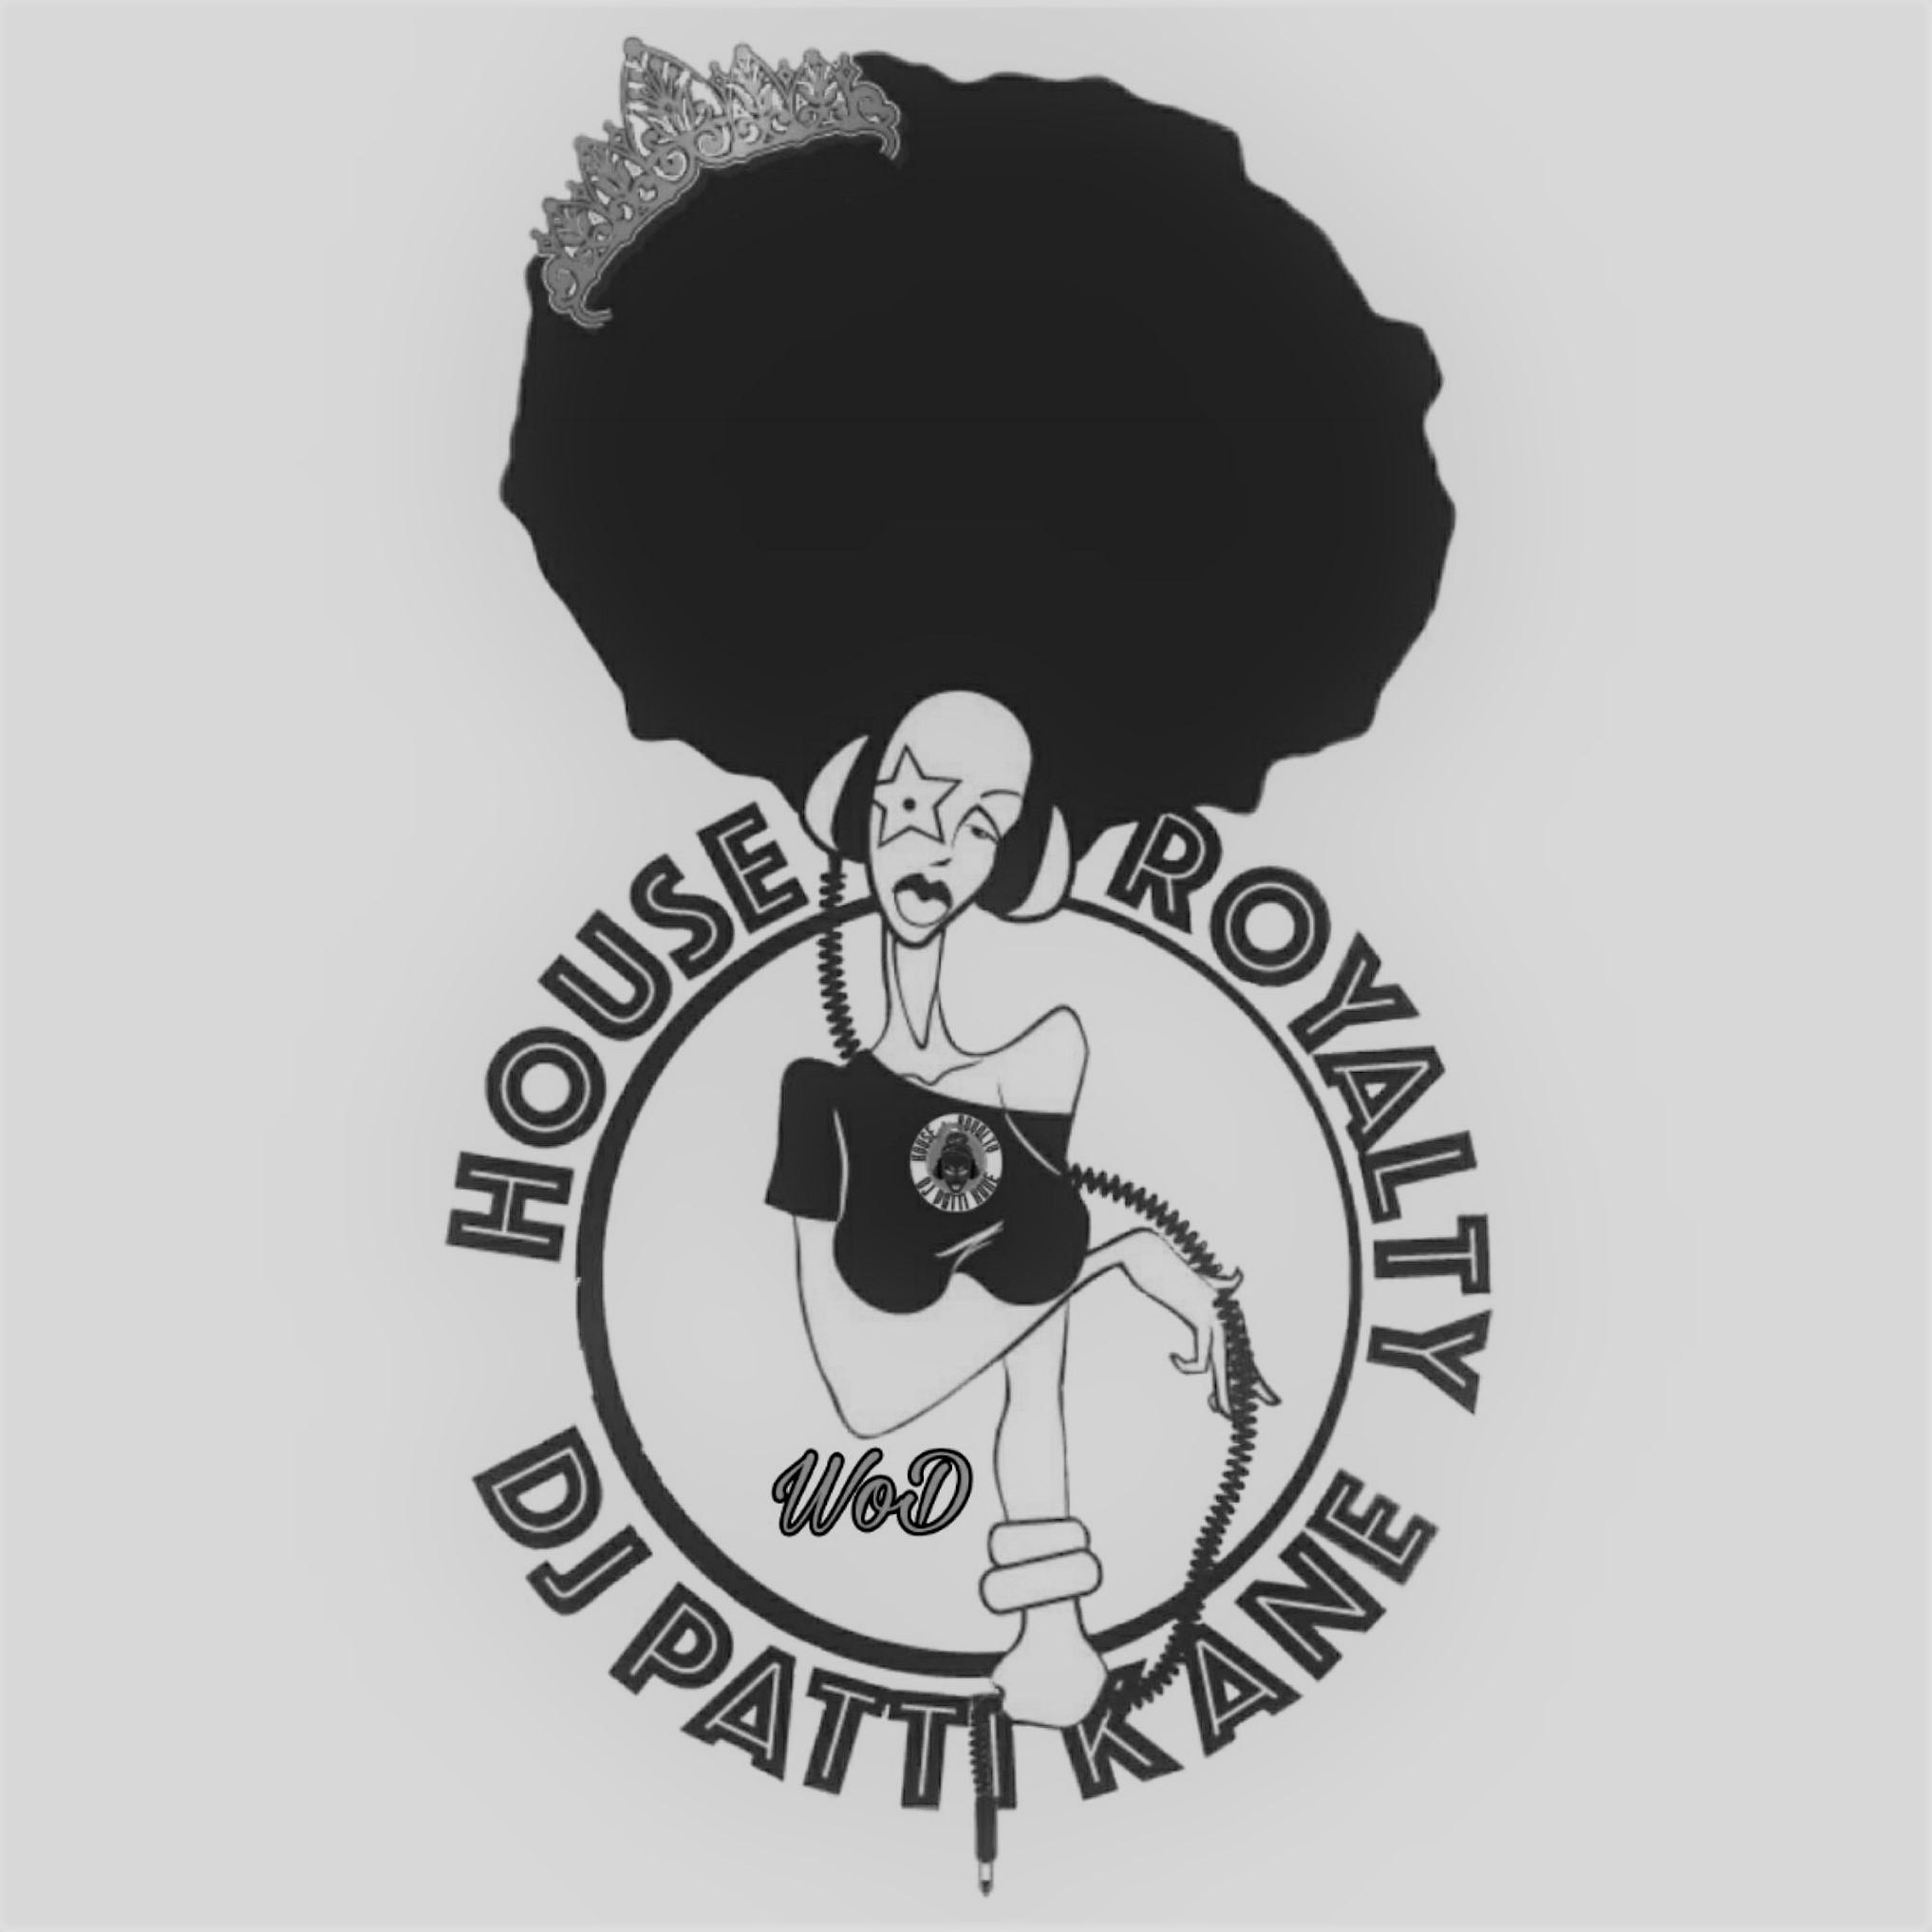  DJ PATTI KANE HOUSE ROYALTY